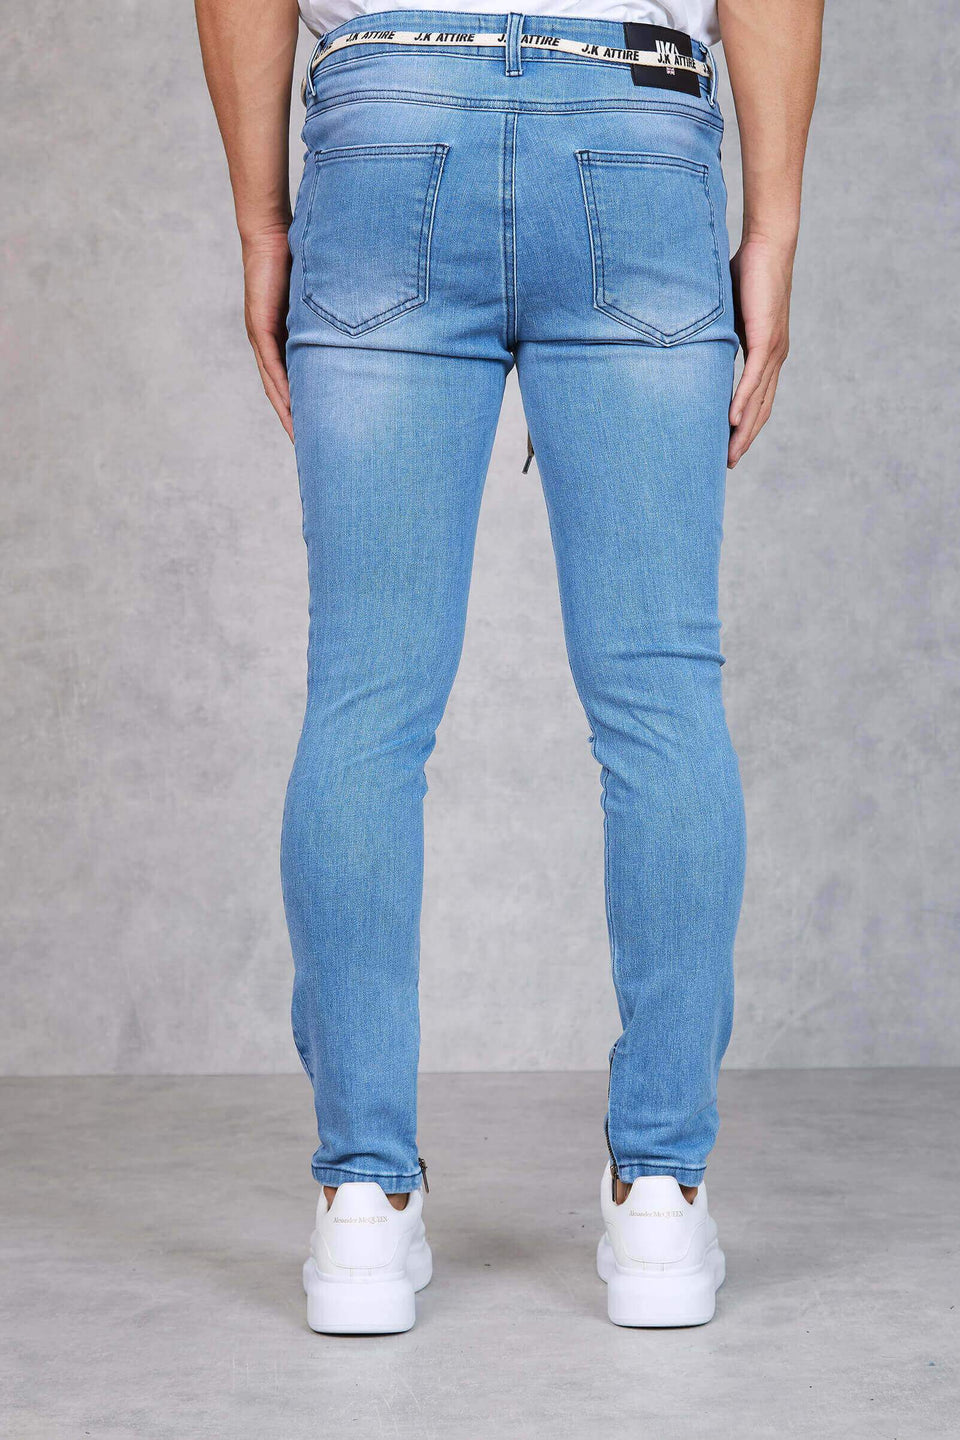 F2 - Ohio Dirty Wash Knee Rip Skinny Jeans - Light Blue